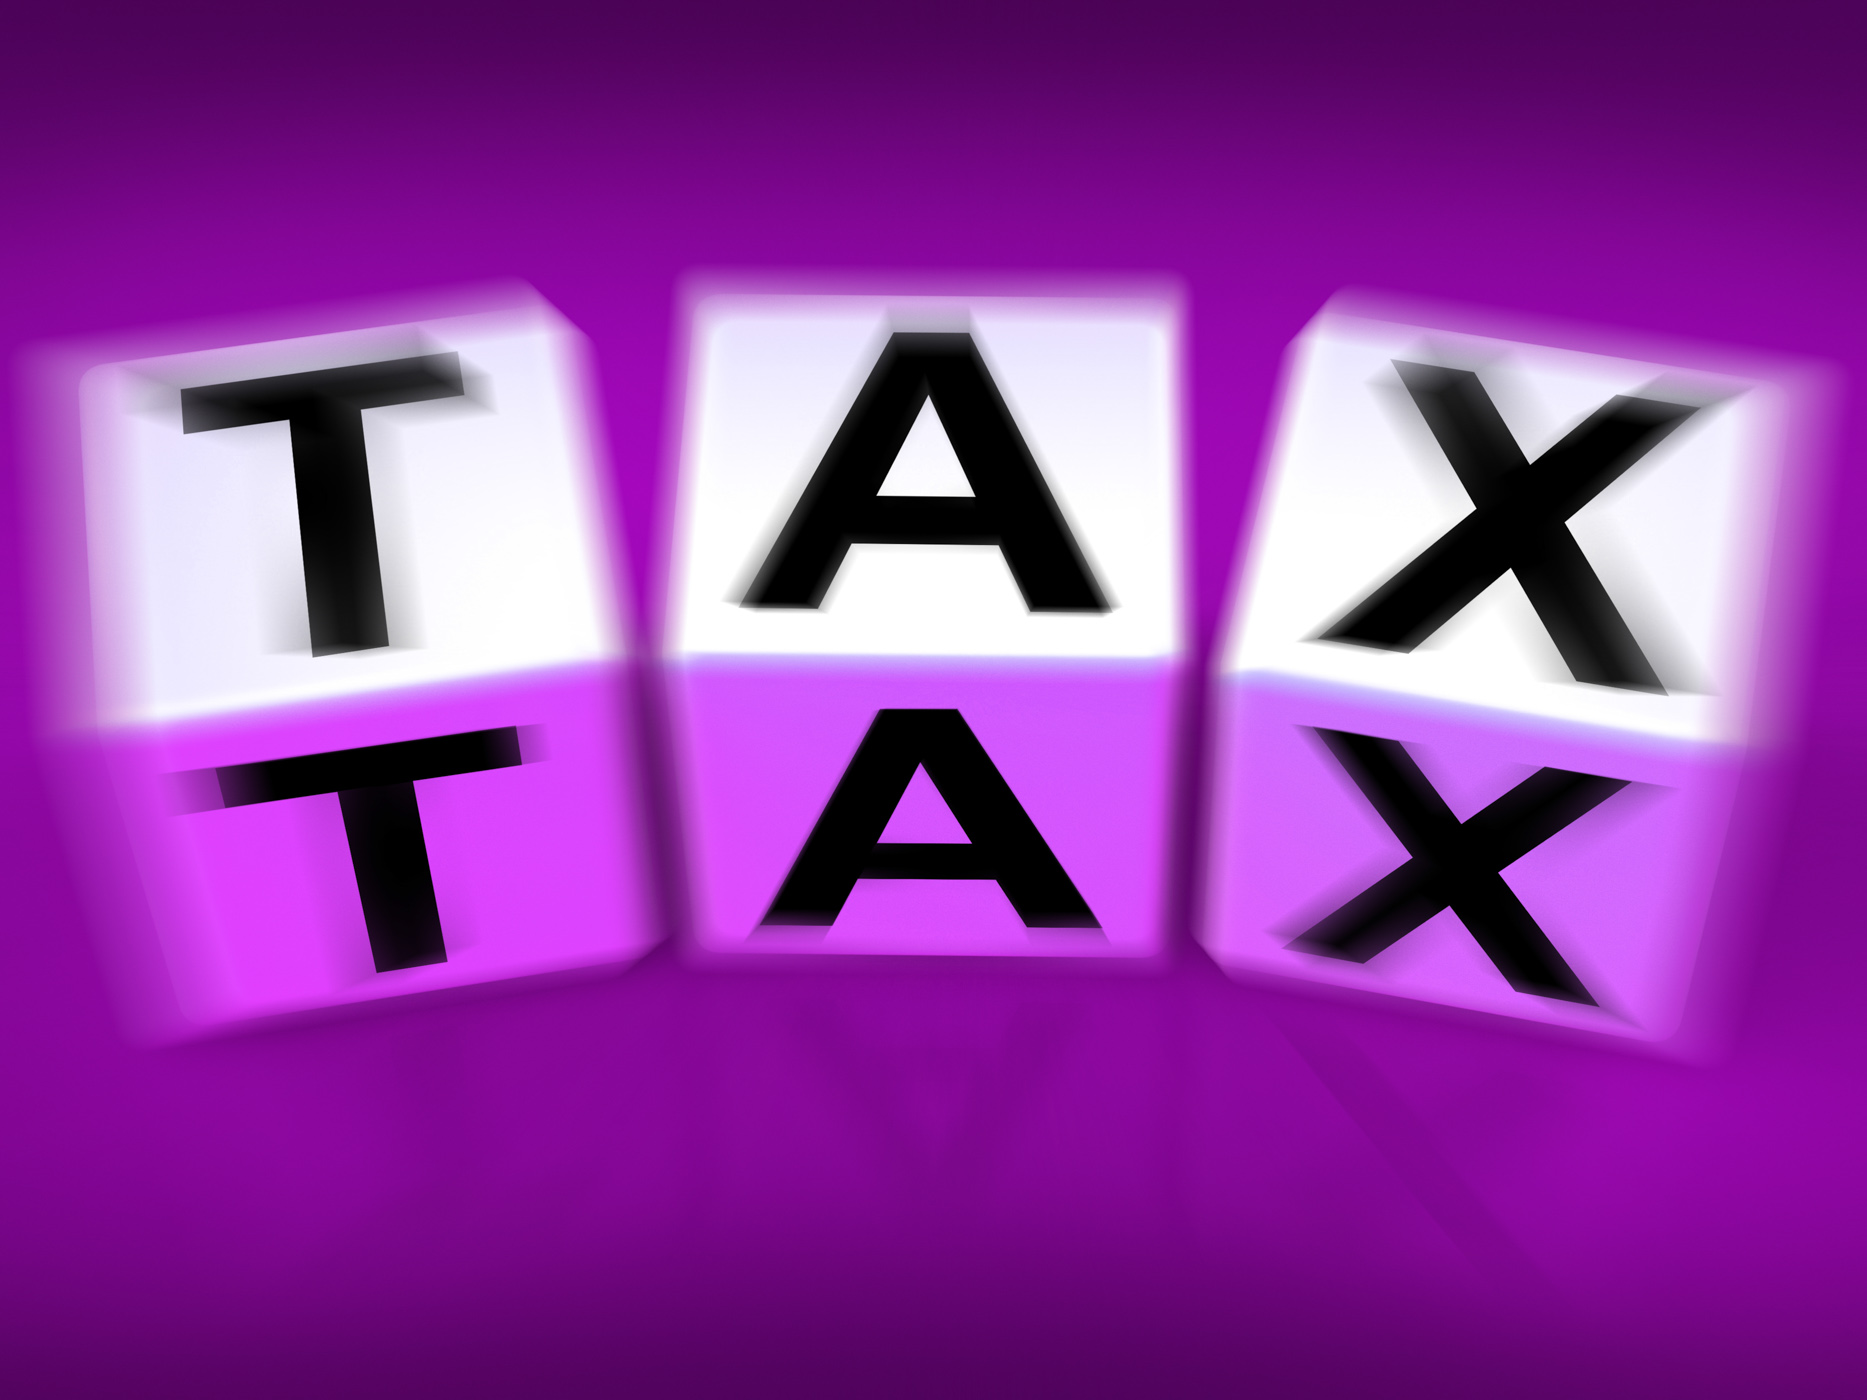 Tax Blocks Displays Taxation and Duties to IRS, Pay, Taxation, Tax, Savings, HQ Photo